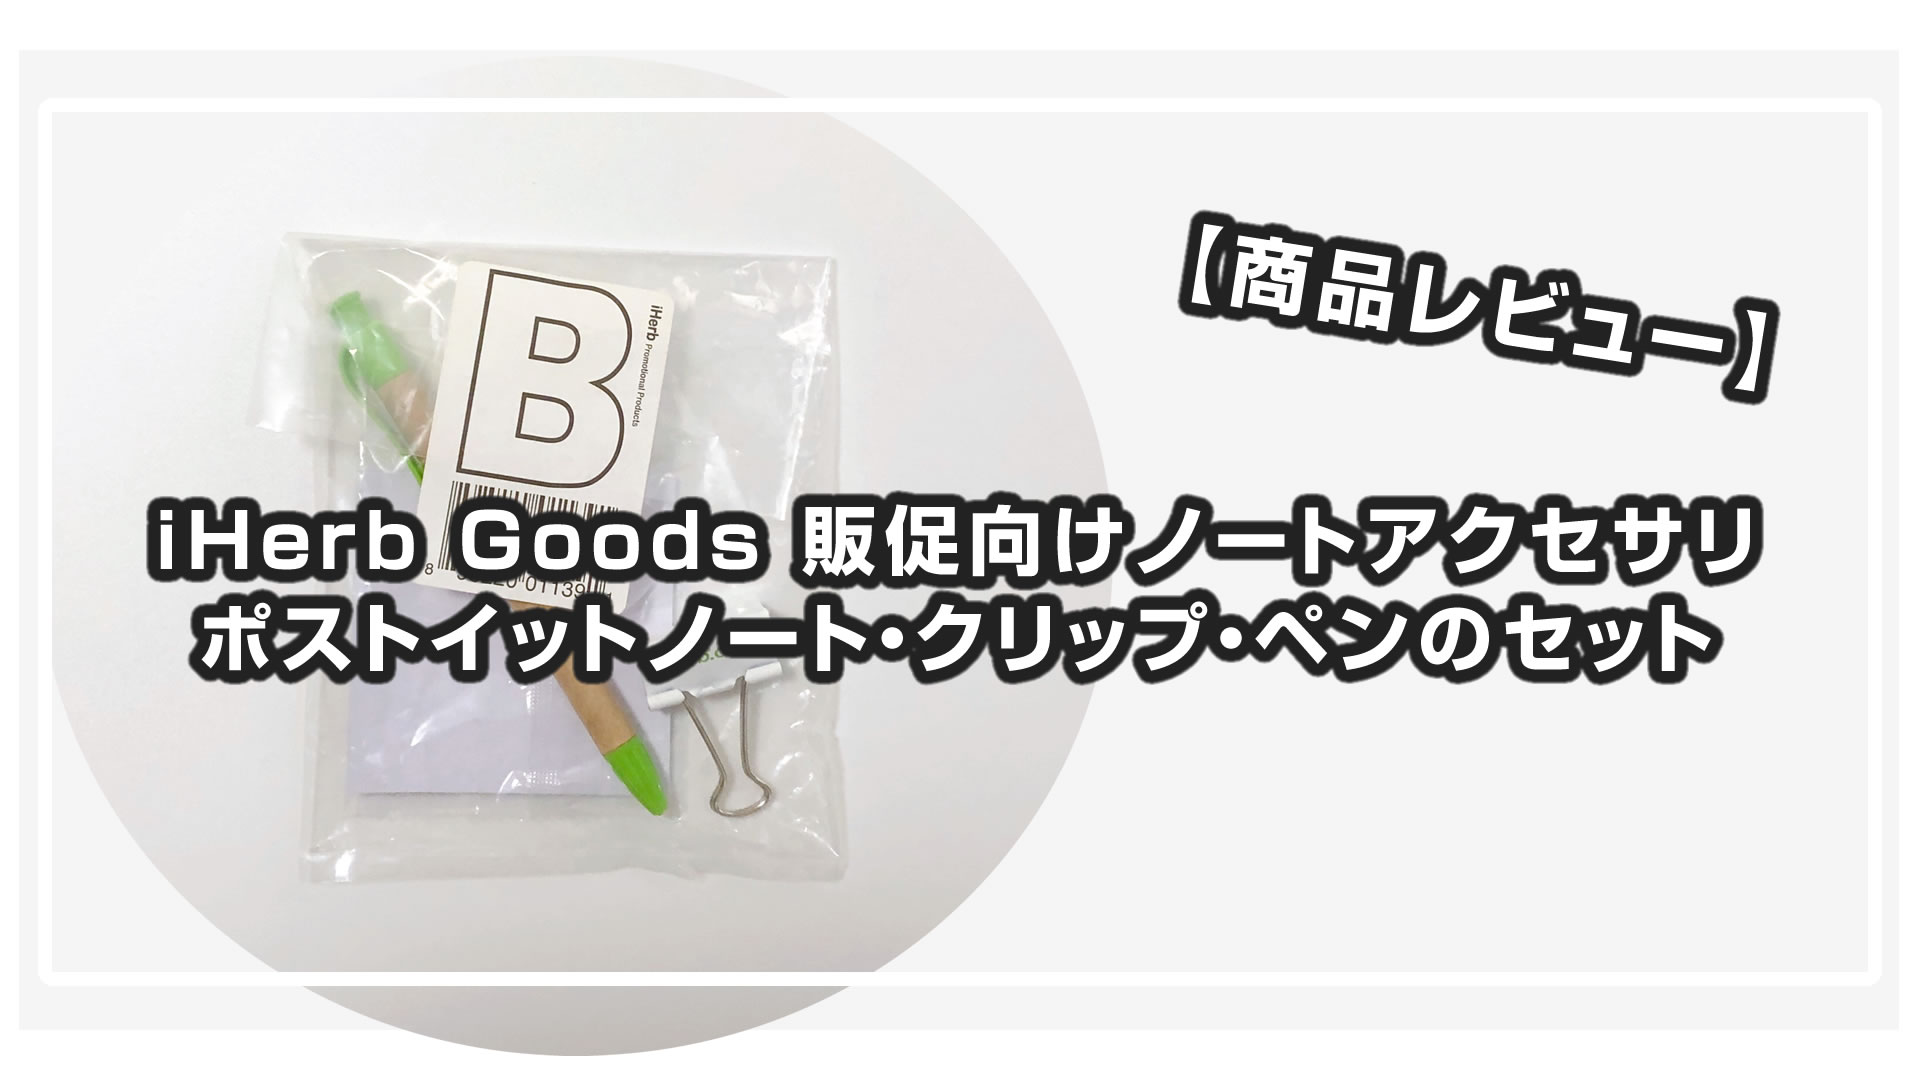 iHerb Goods 販促向けノートアクセサリ-ポストイットノート・クリップ・ペンのセット【商品レビュー】